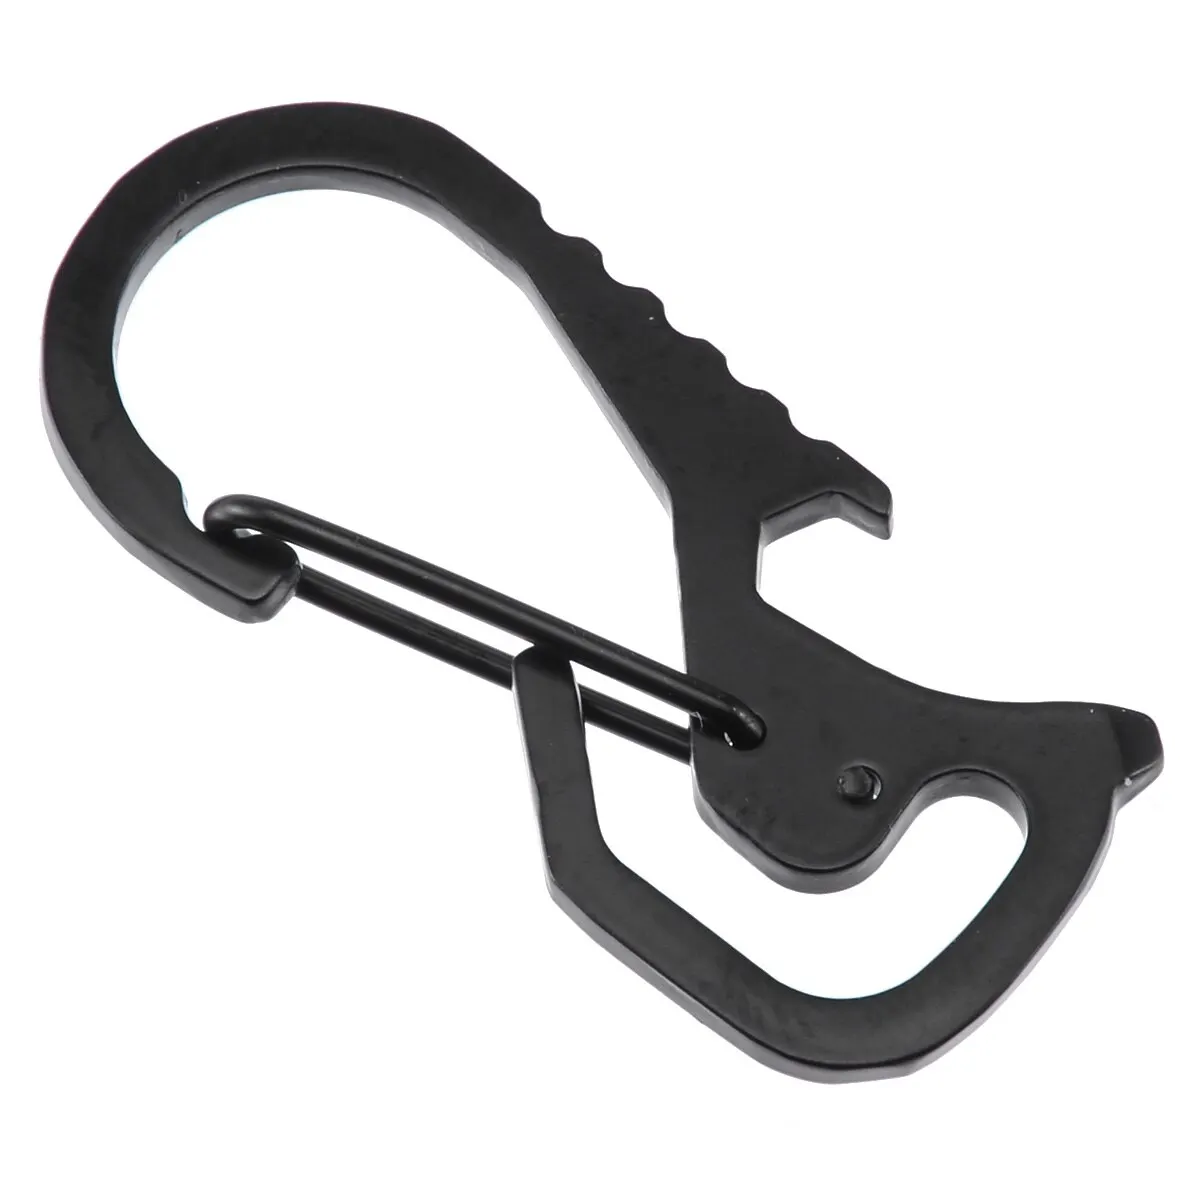 Stainless Steel Buckle Carabiner Keychain Hook Clip Multi